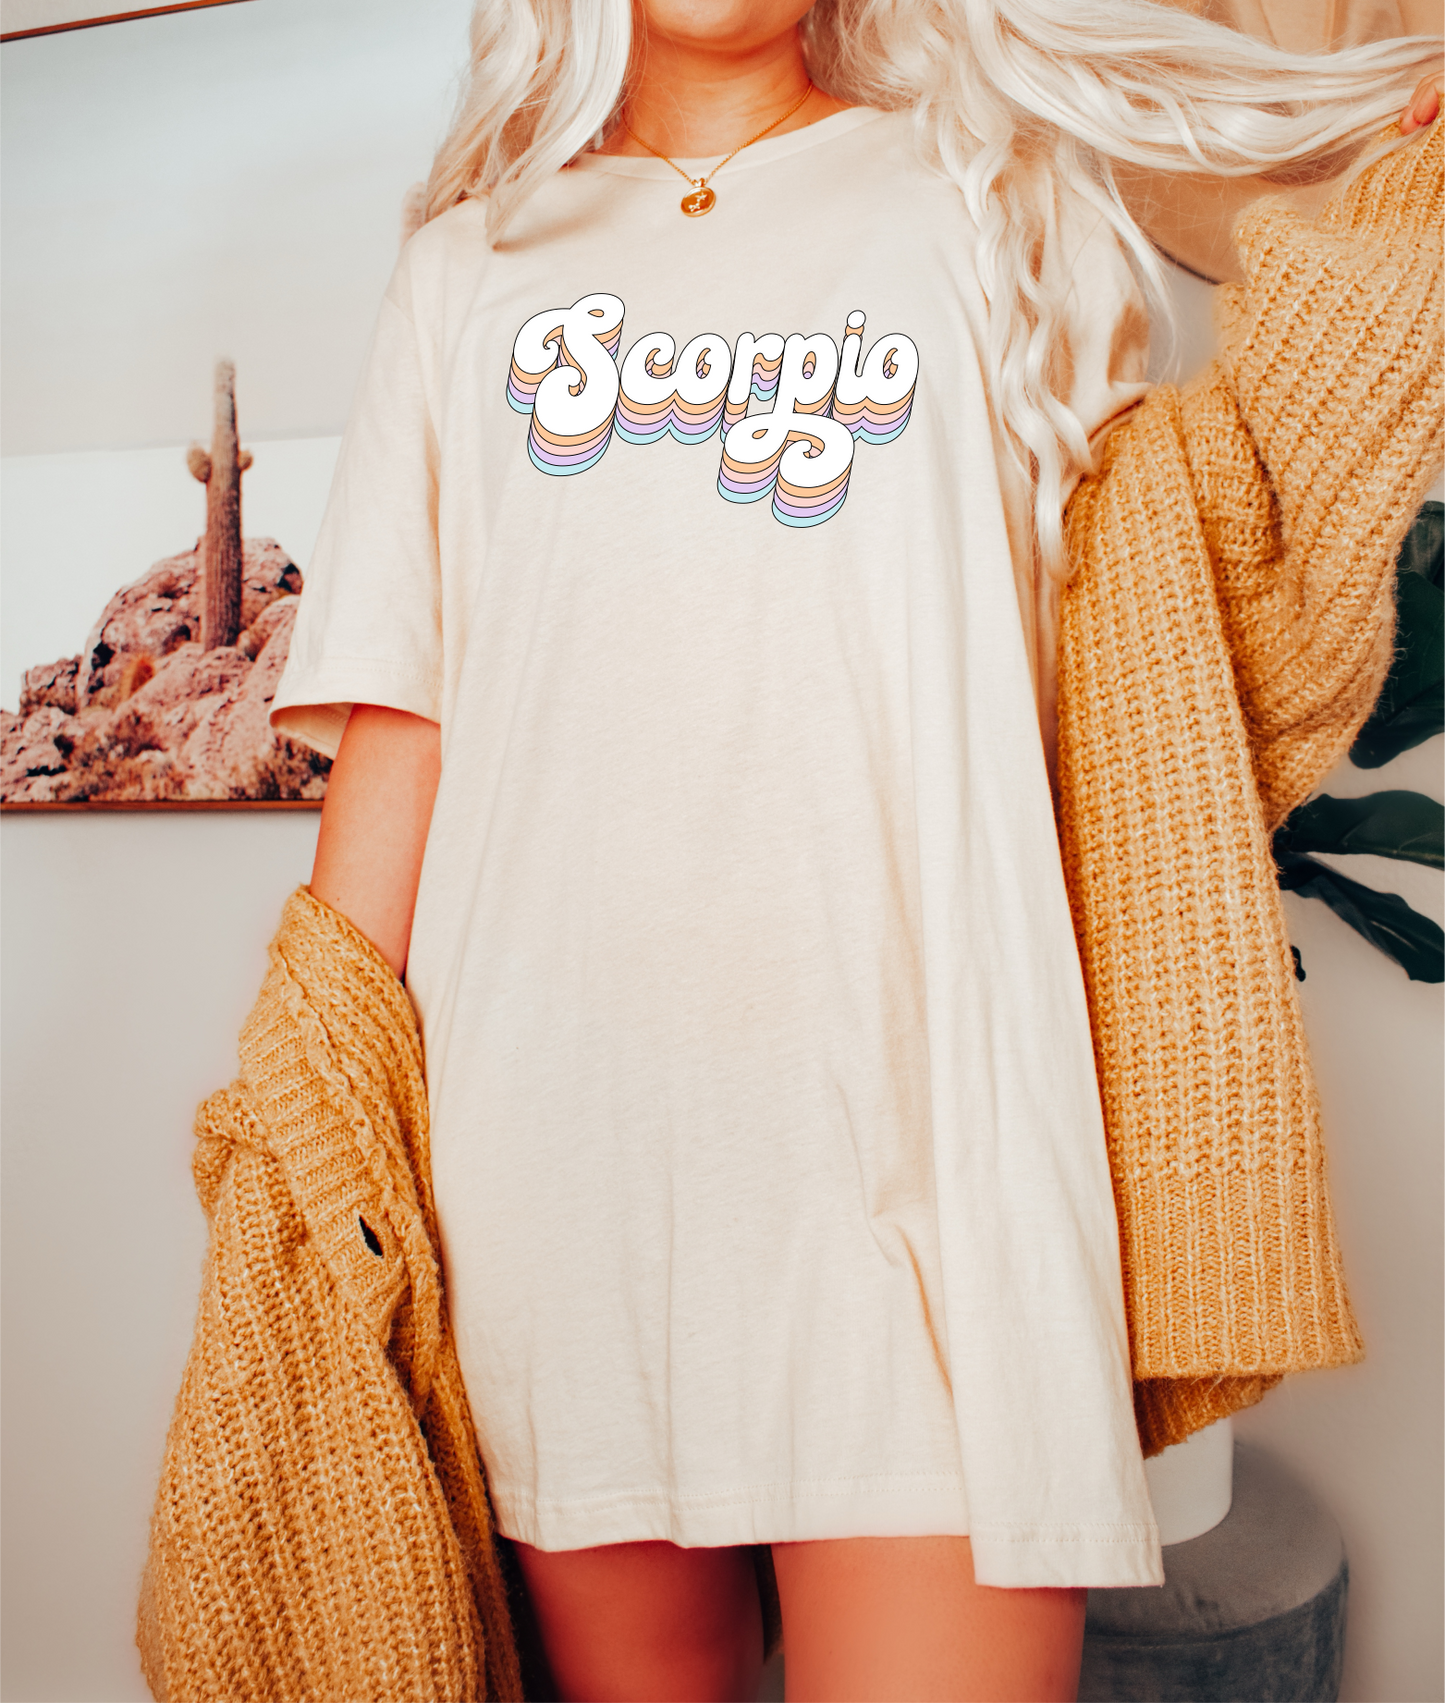 Scorpio Astrology Shirt